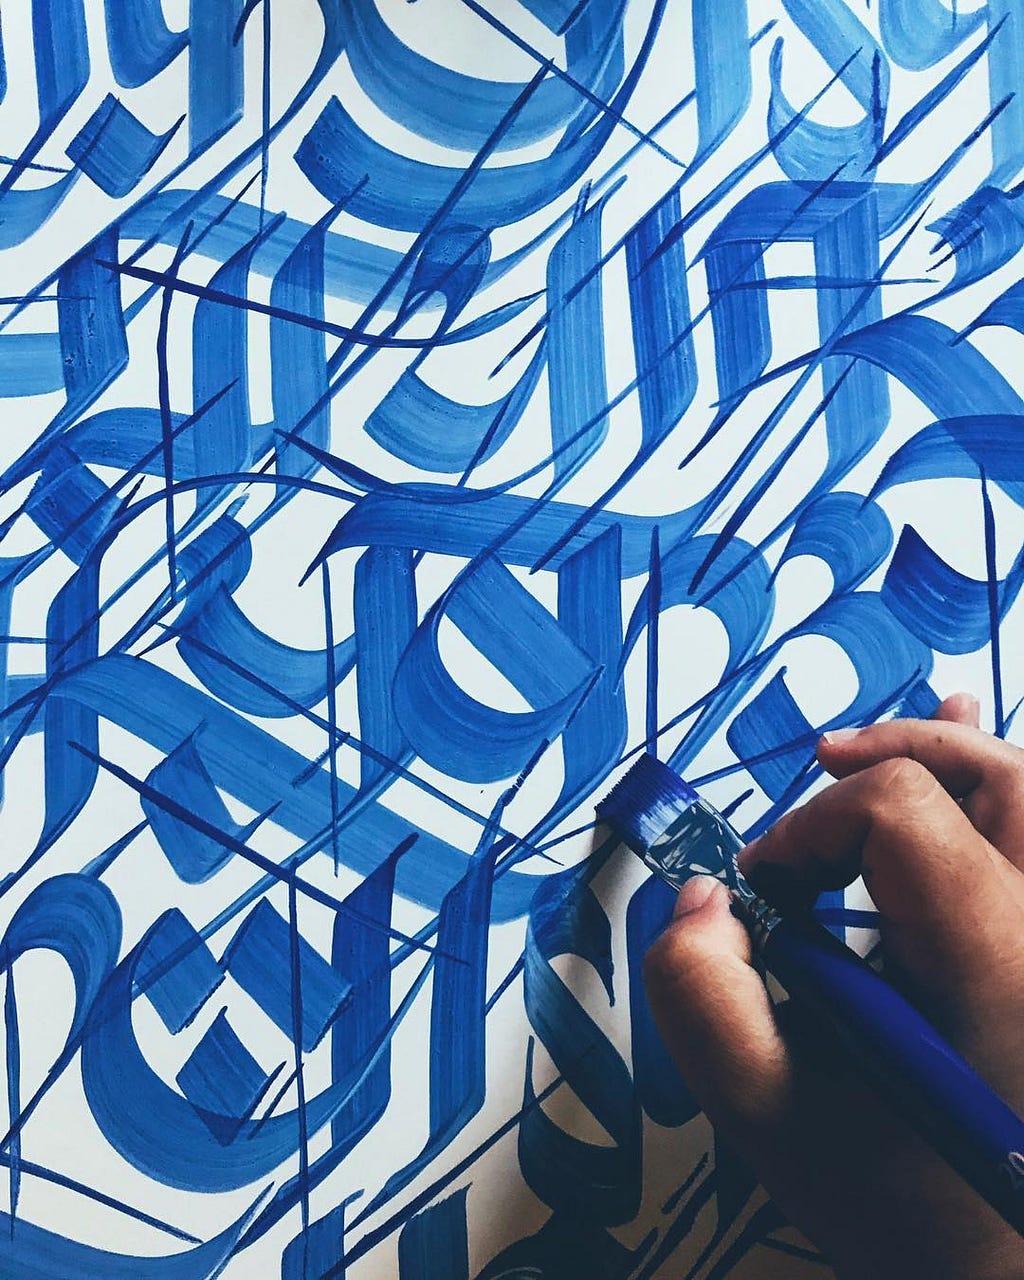 A work in progress of blue, graffiti-style Nepali calligraphy by Imagine, a Nepali artist based in Boston, MA.